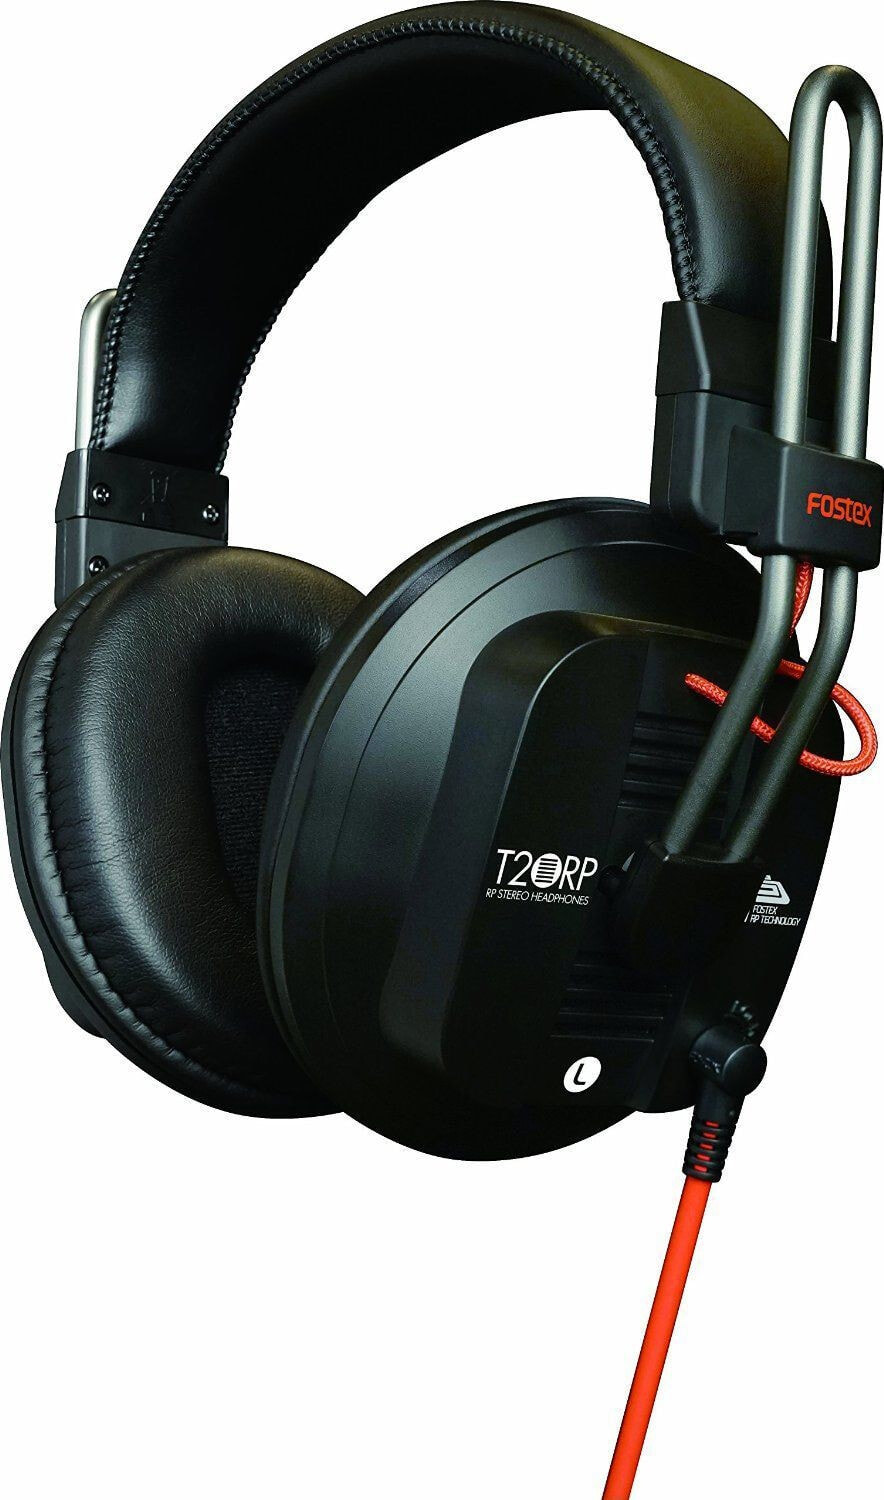 Fostex T20RP MK3 headphones